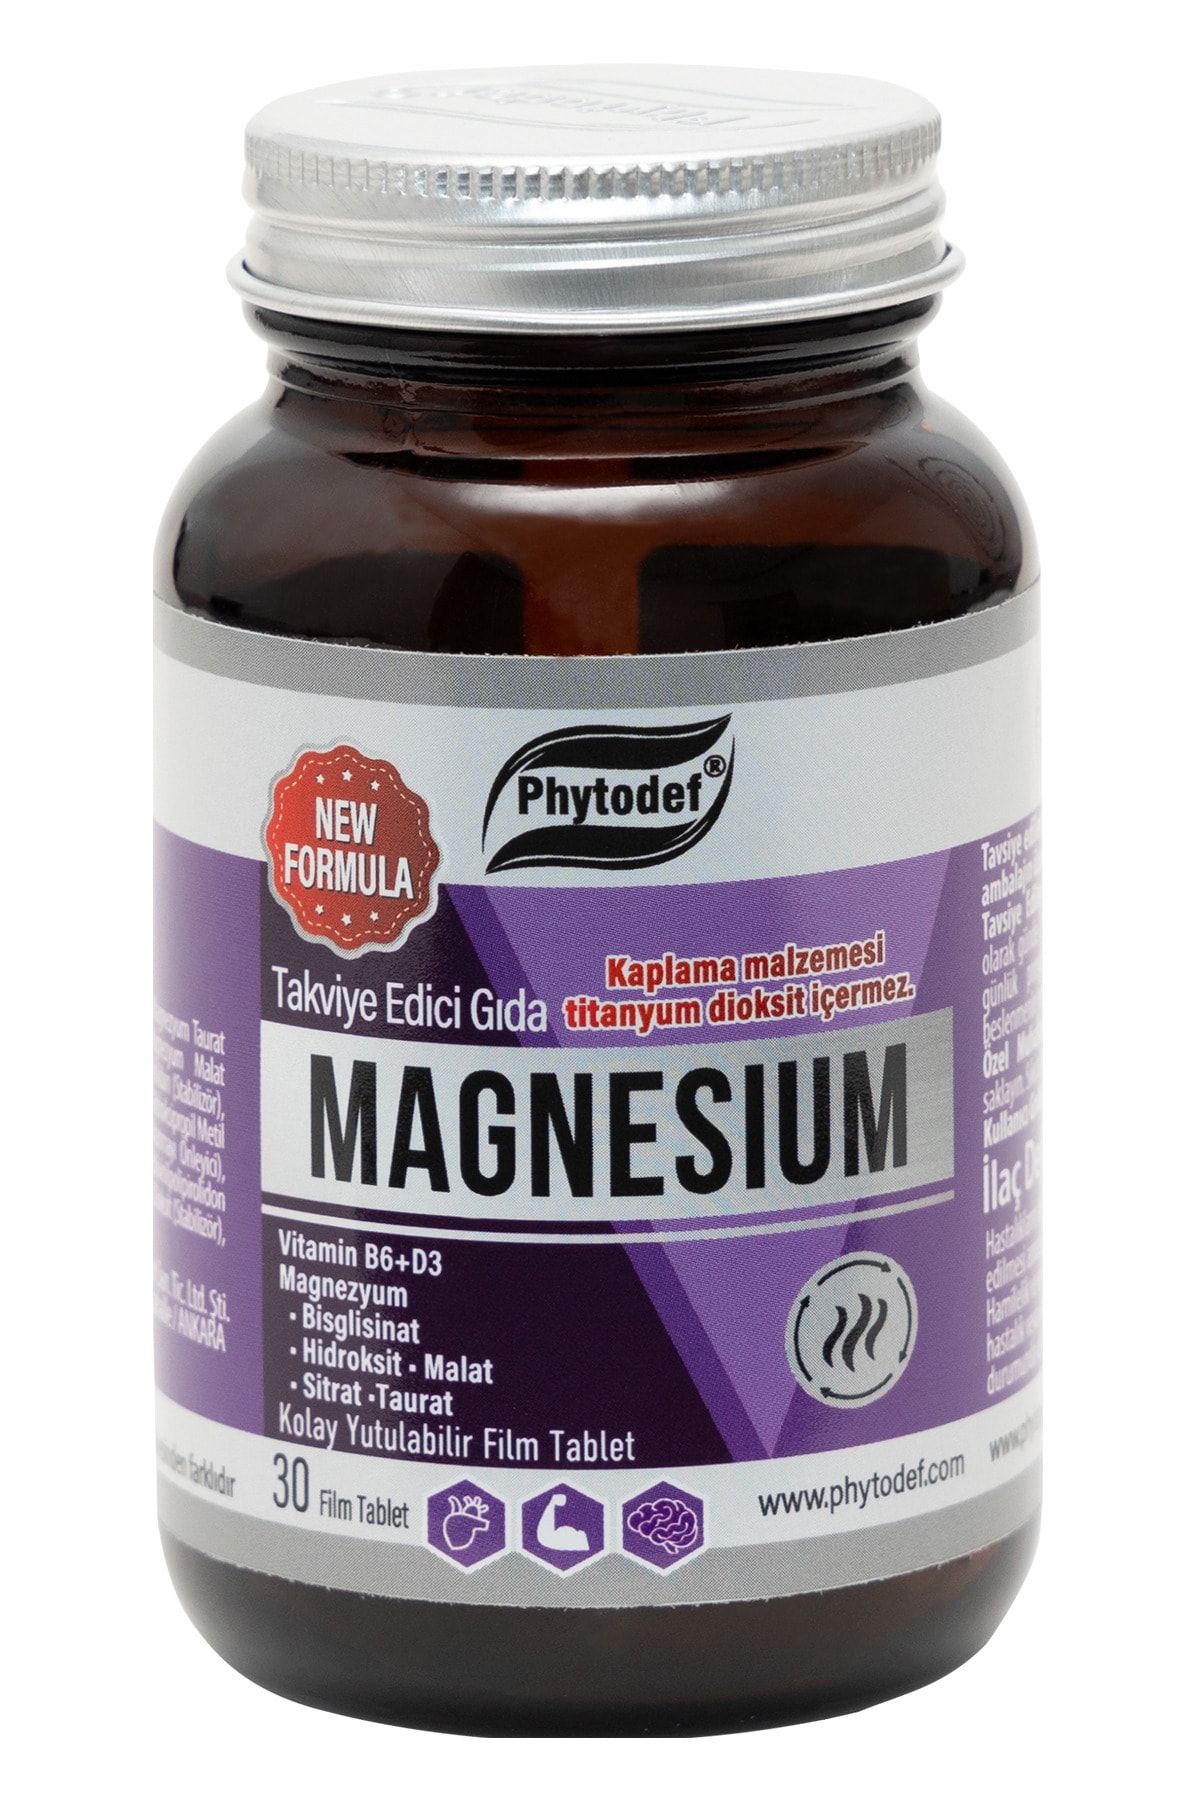 Phytodef Magnezyum Vitamin B6 D3 - 30 Tablet (MAGNESİUM)